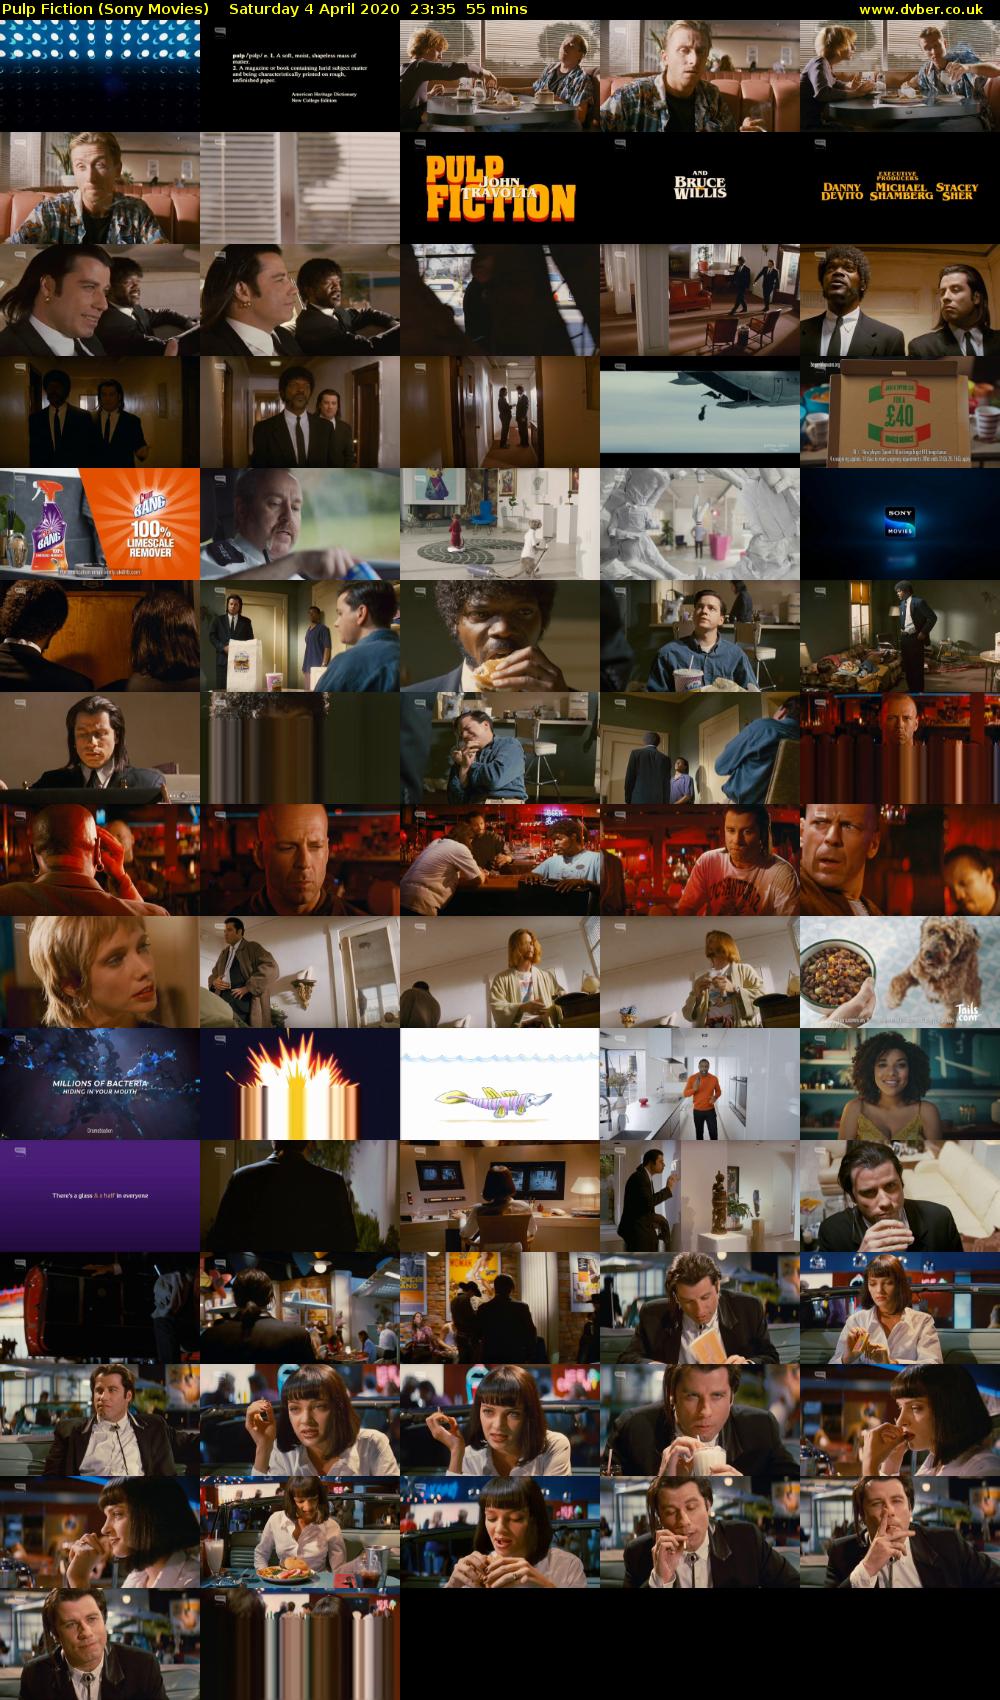 Pulp Fiction (Sony Movies) Saturday 4 April 2020 23:35 - 00:30